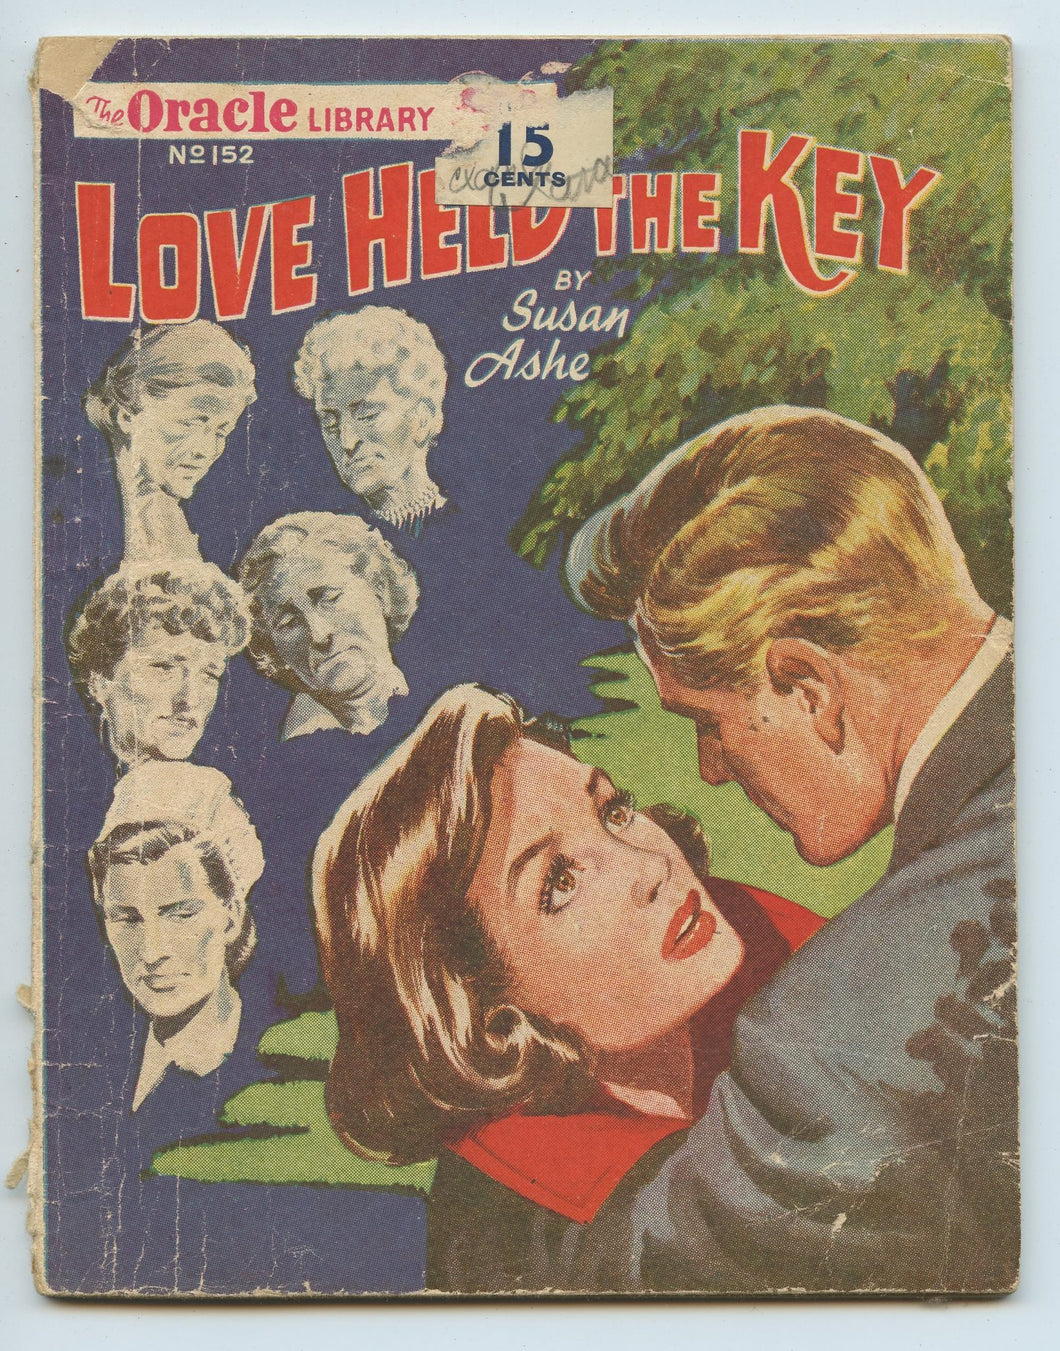 Love Held The Key